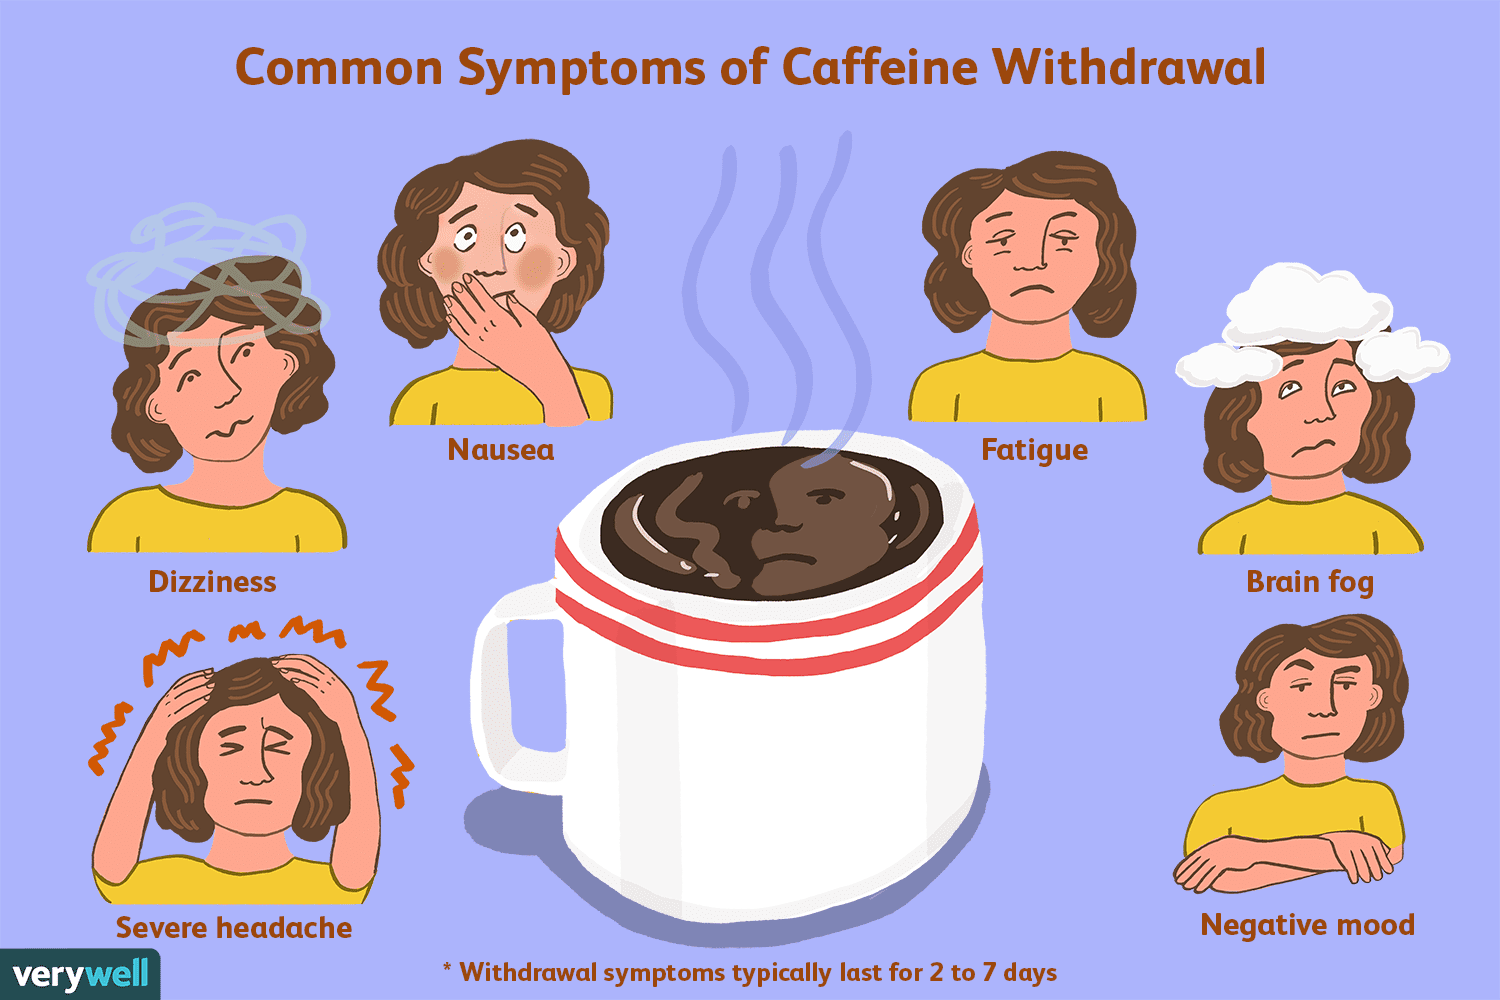 Can Caffeine Withdrawal Cause Night Sweats?